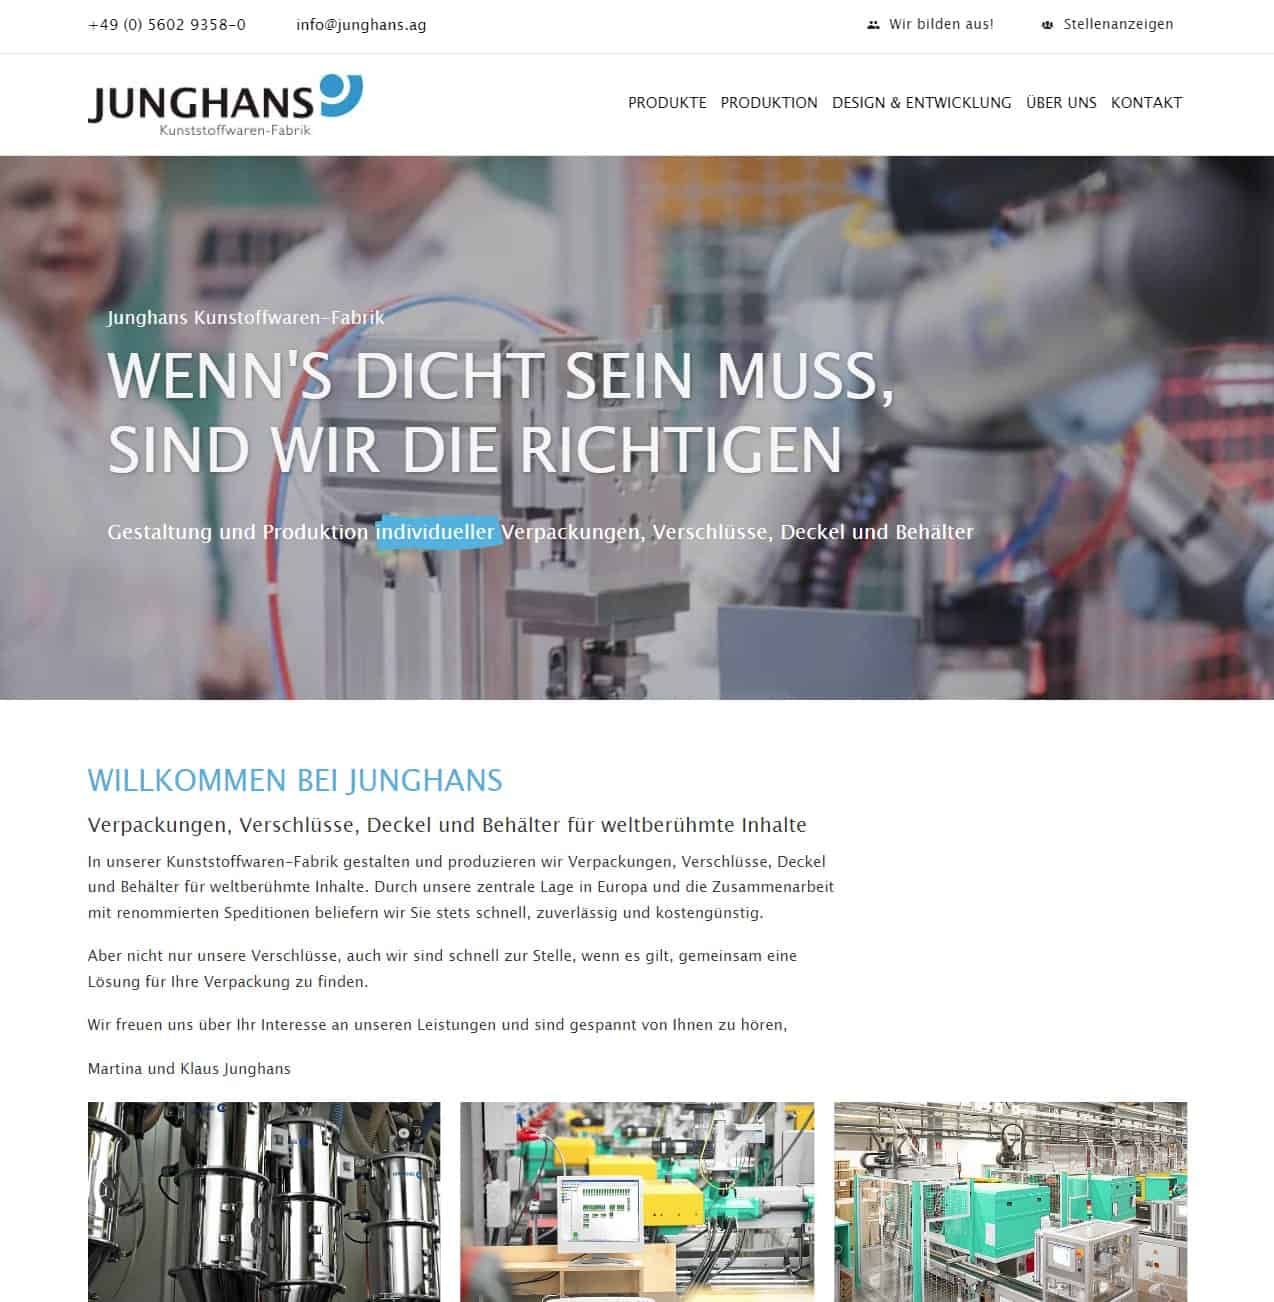 Referenz Thomas Ulbricht Webdesign: Junghans Kunsstoffwarenfabrik